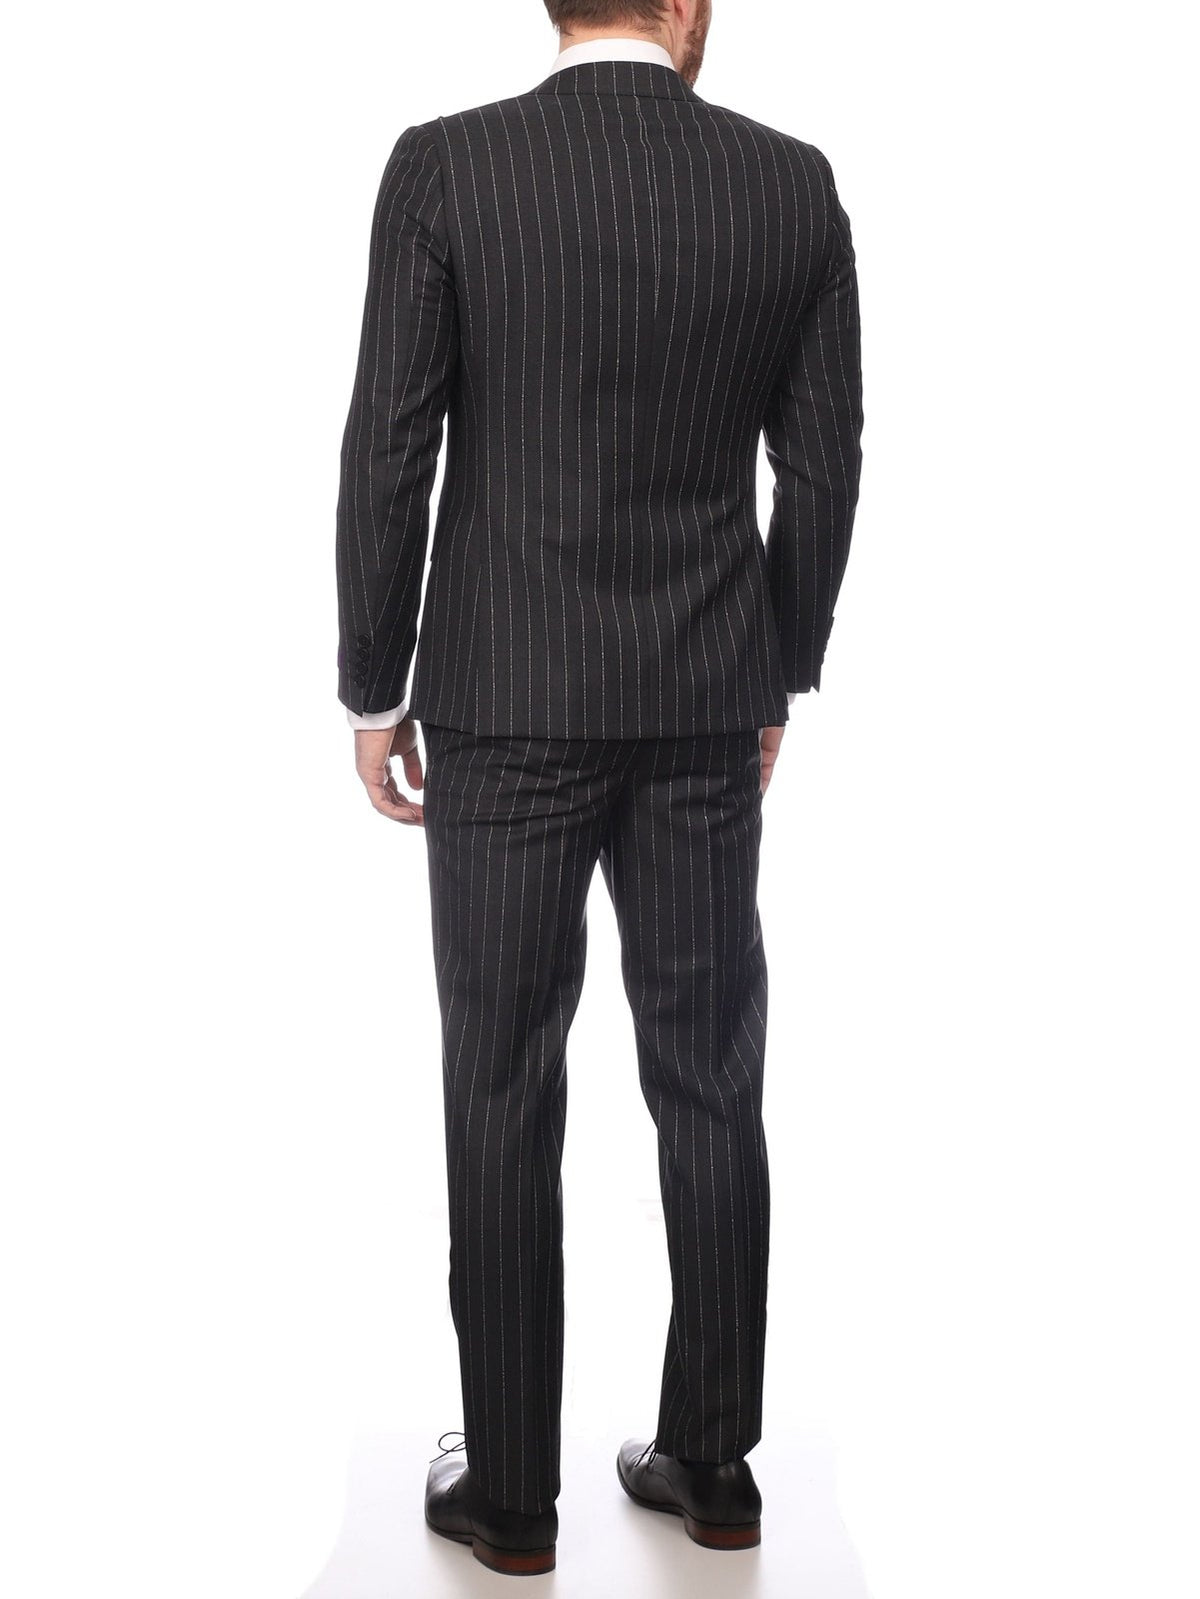 Napoli SUITS Napoli Mens Charcoal Pinstripe 100% Italian Wool Slim Fit Suit With Peak Lapels